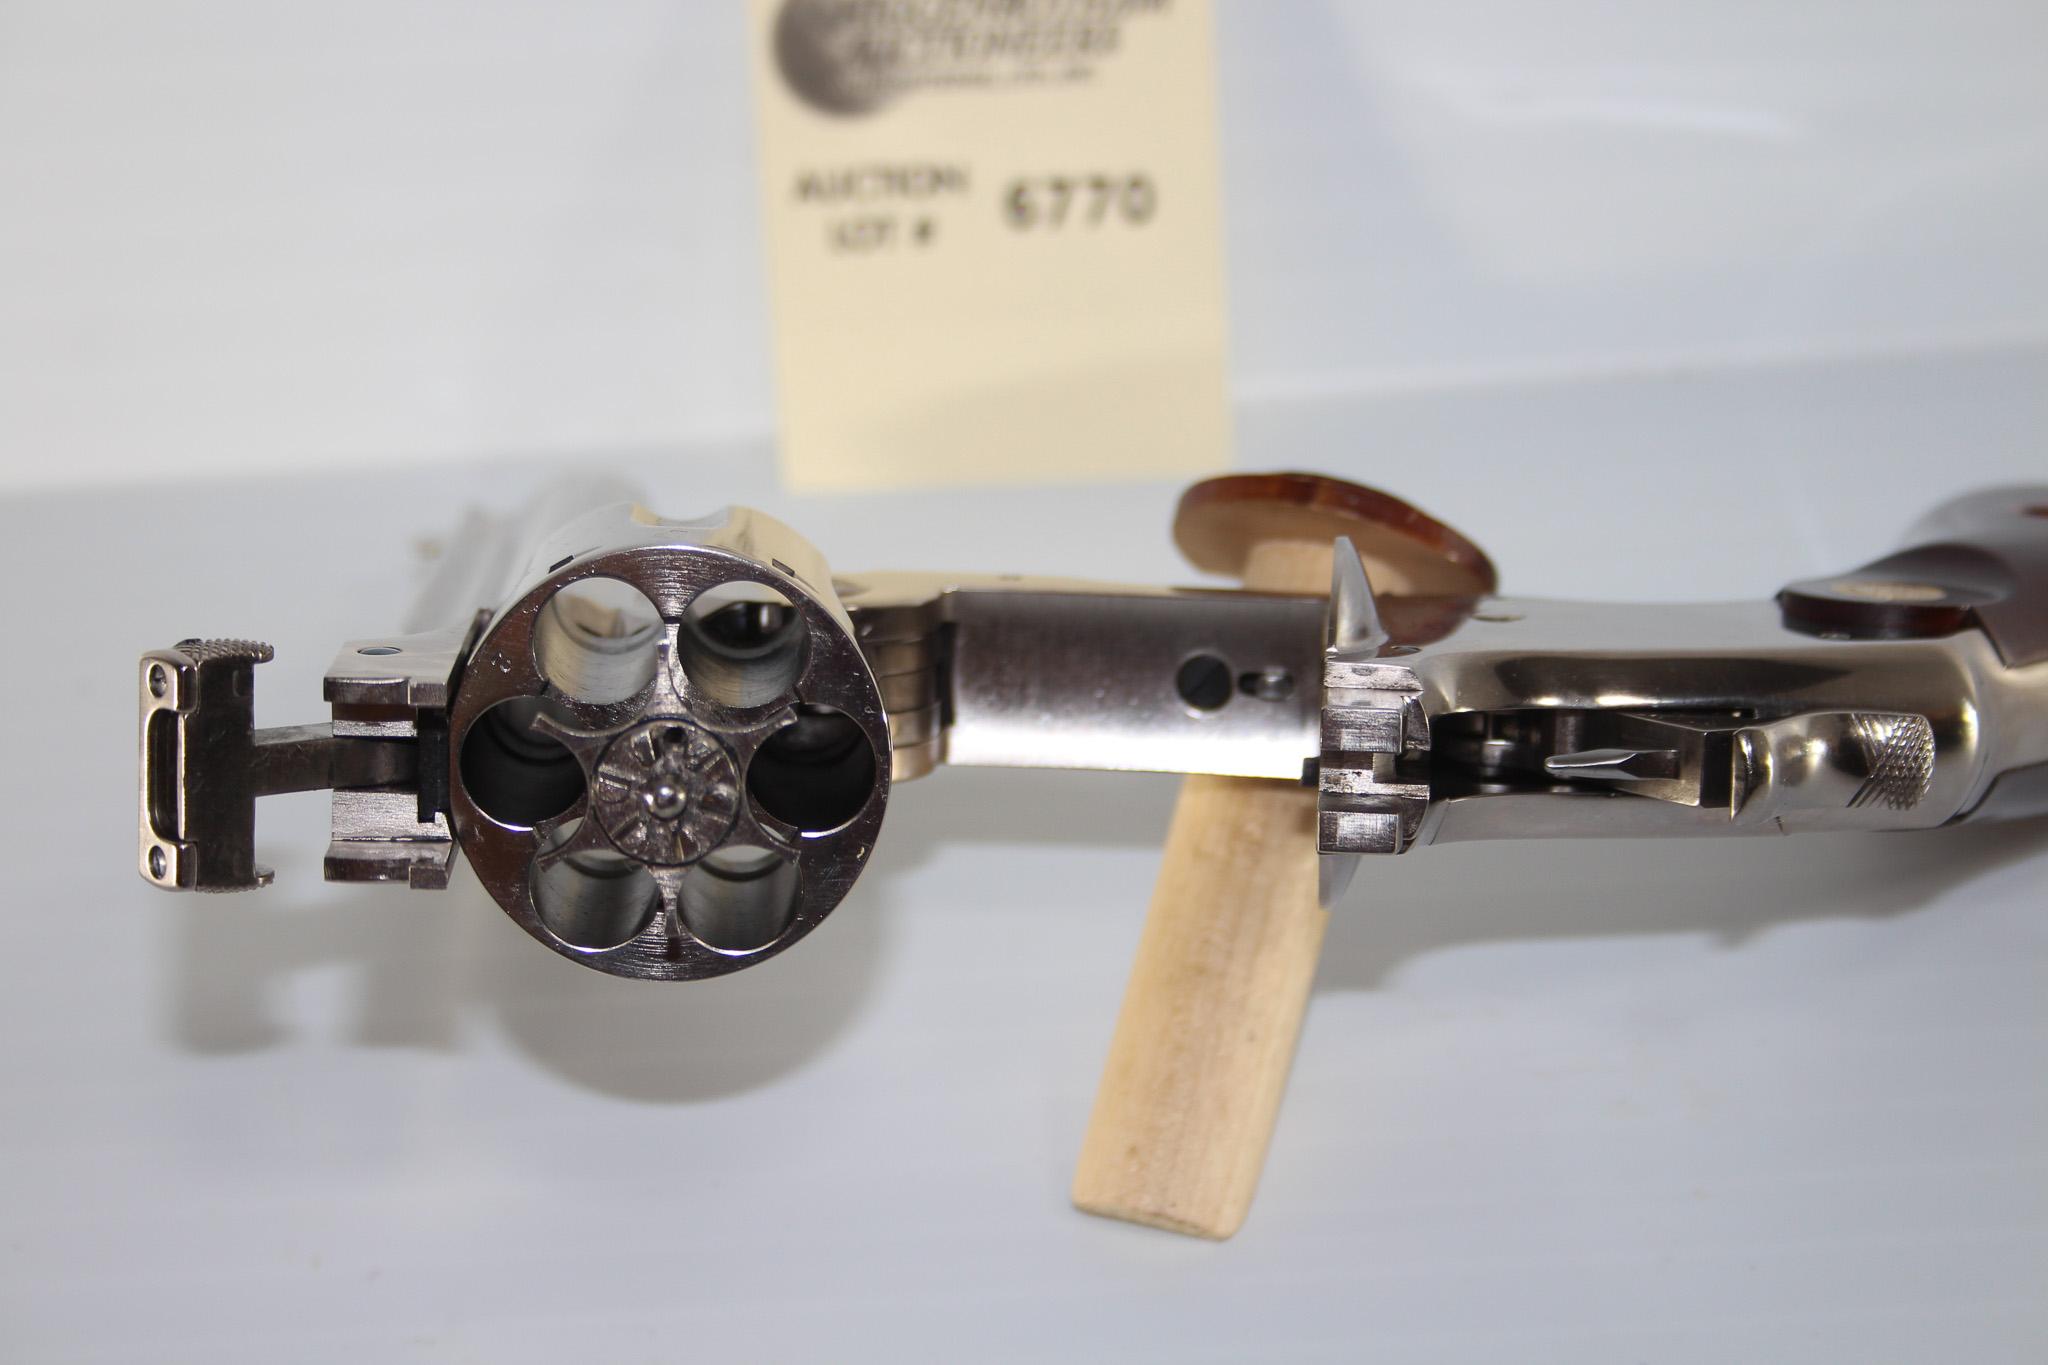 Beretta, Laramie Model, .45LC Revolver